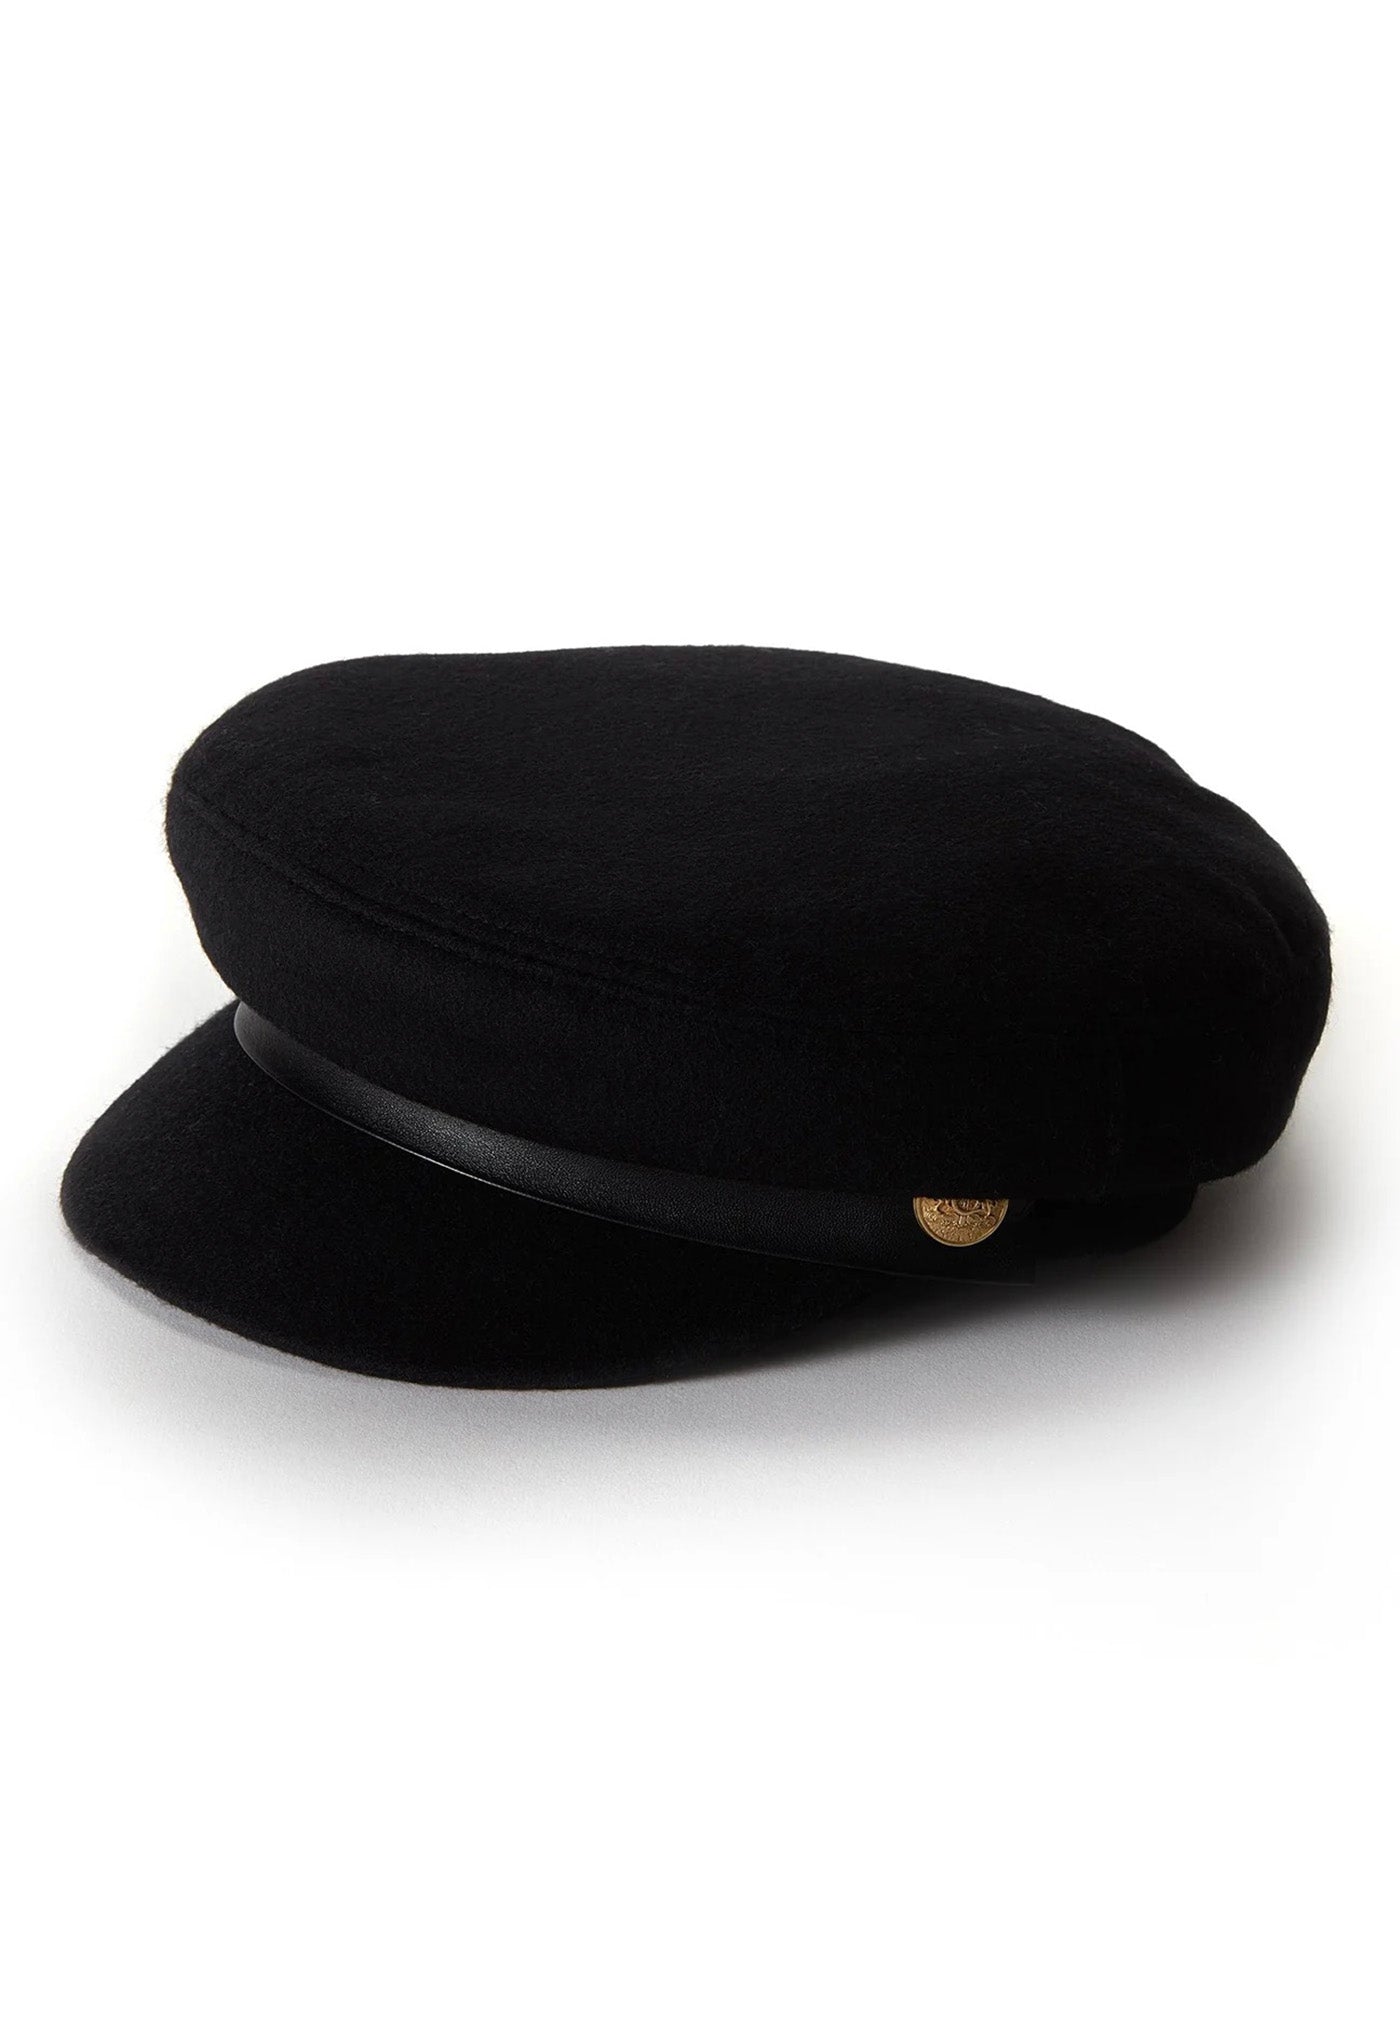 Bretton Hat - Black sold by Angel Divine